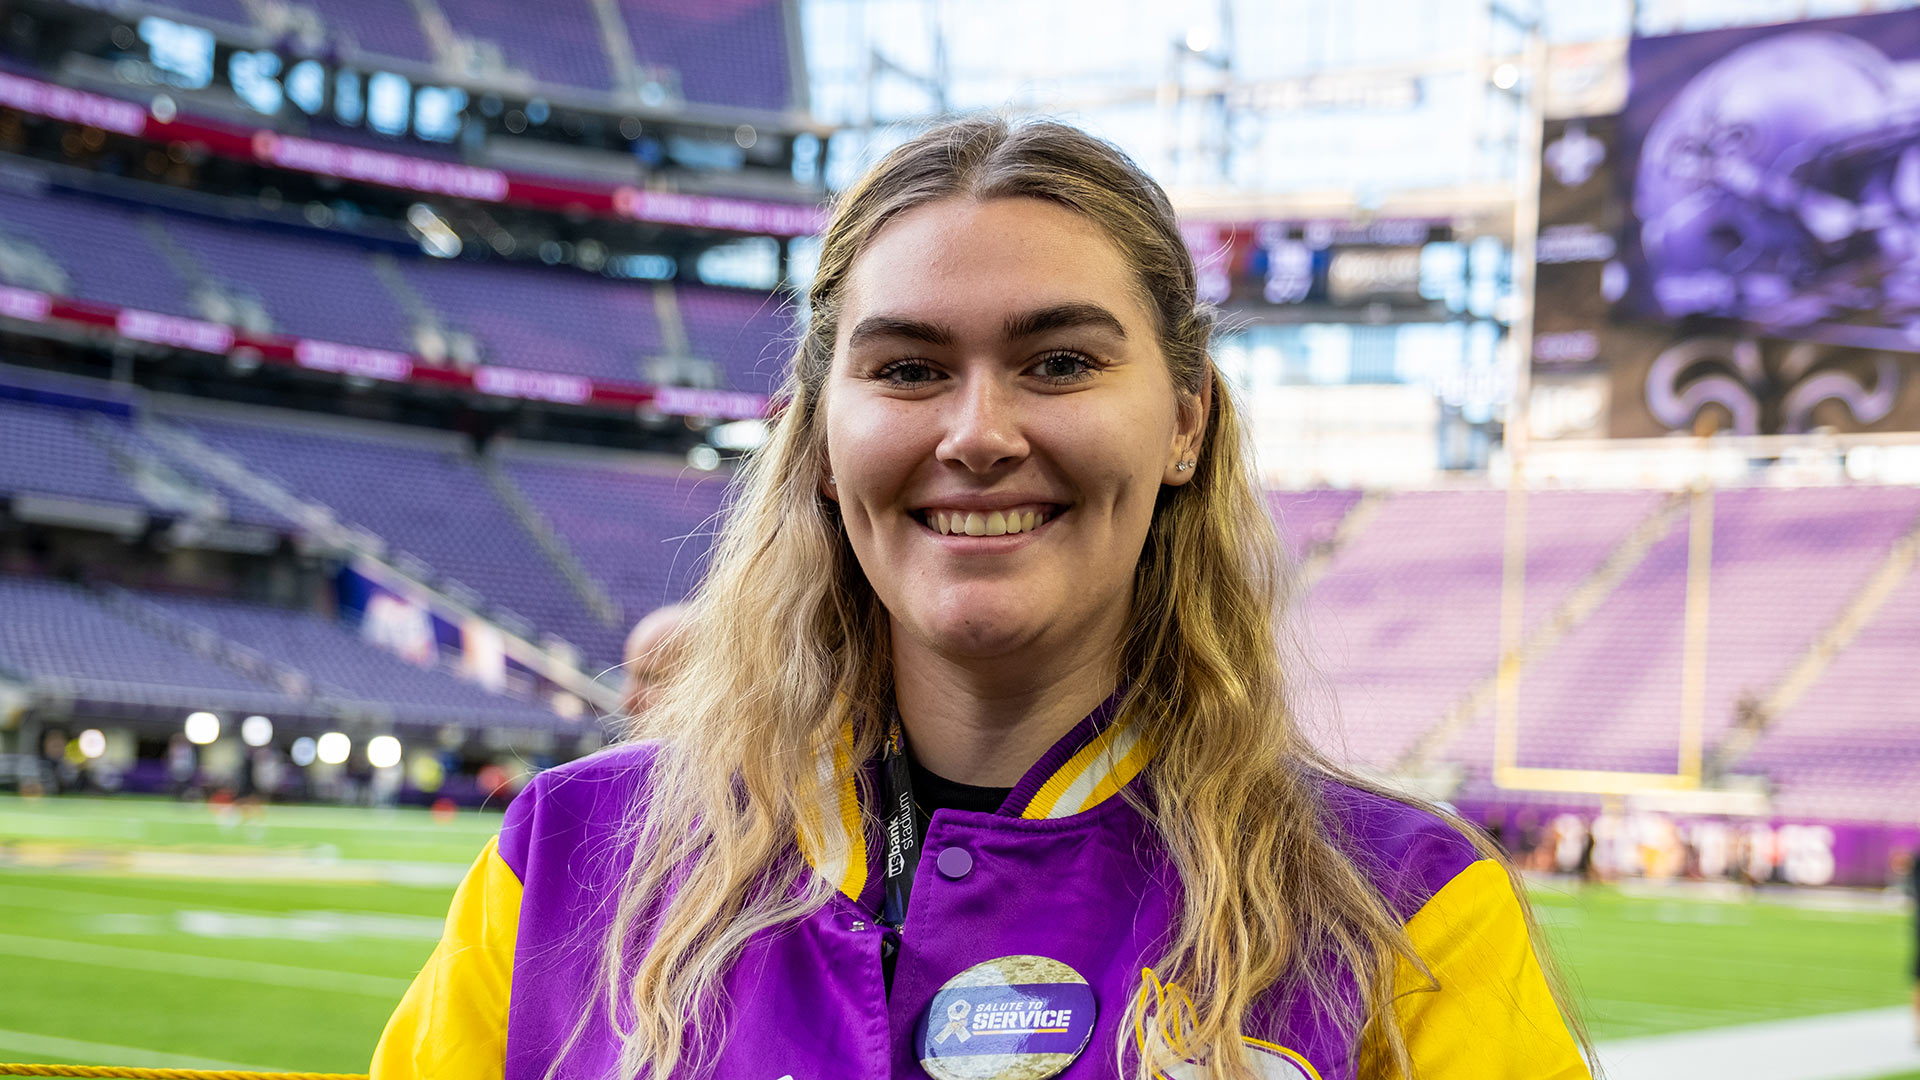 St. Thomas student Morgan on the field at U.S. Bank Stadium during her internship with the Minnesota Vikings